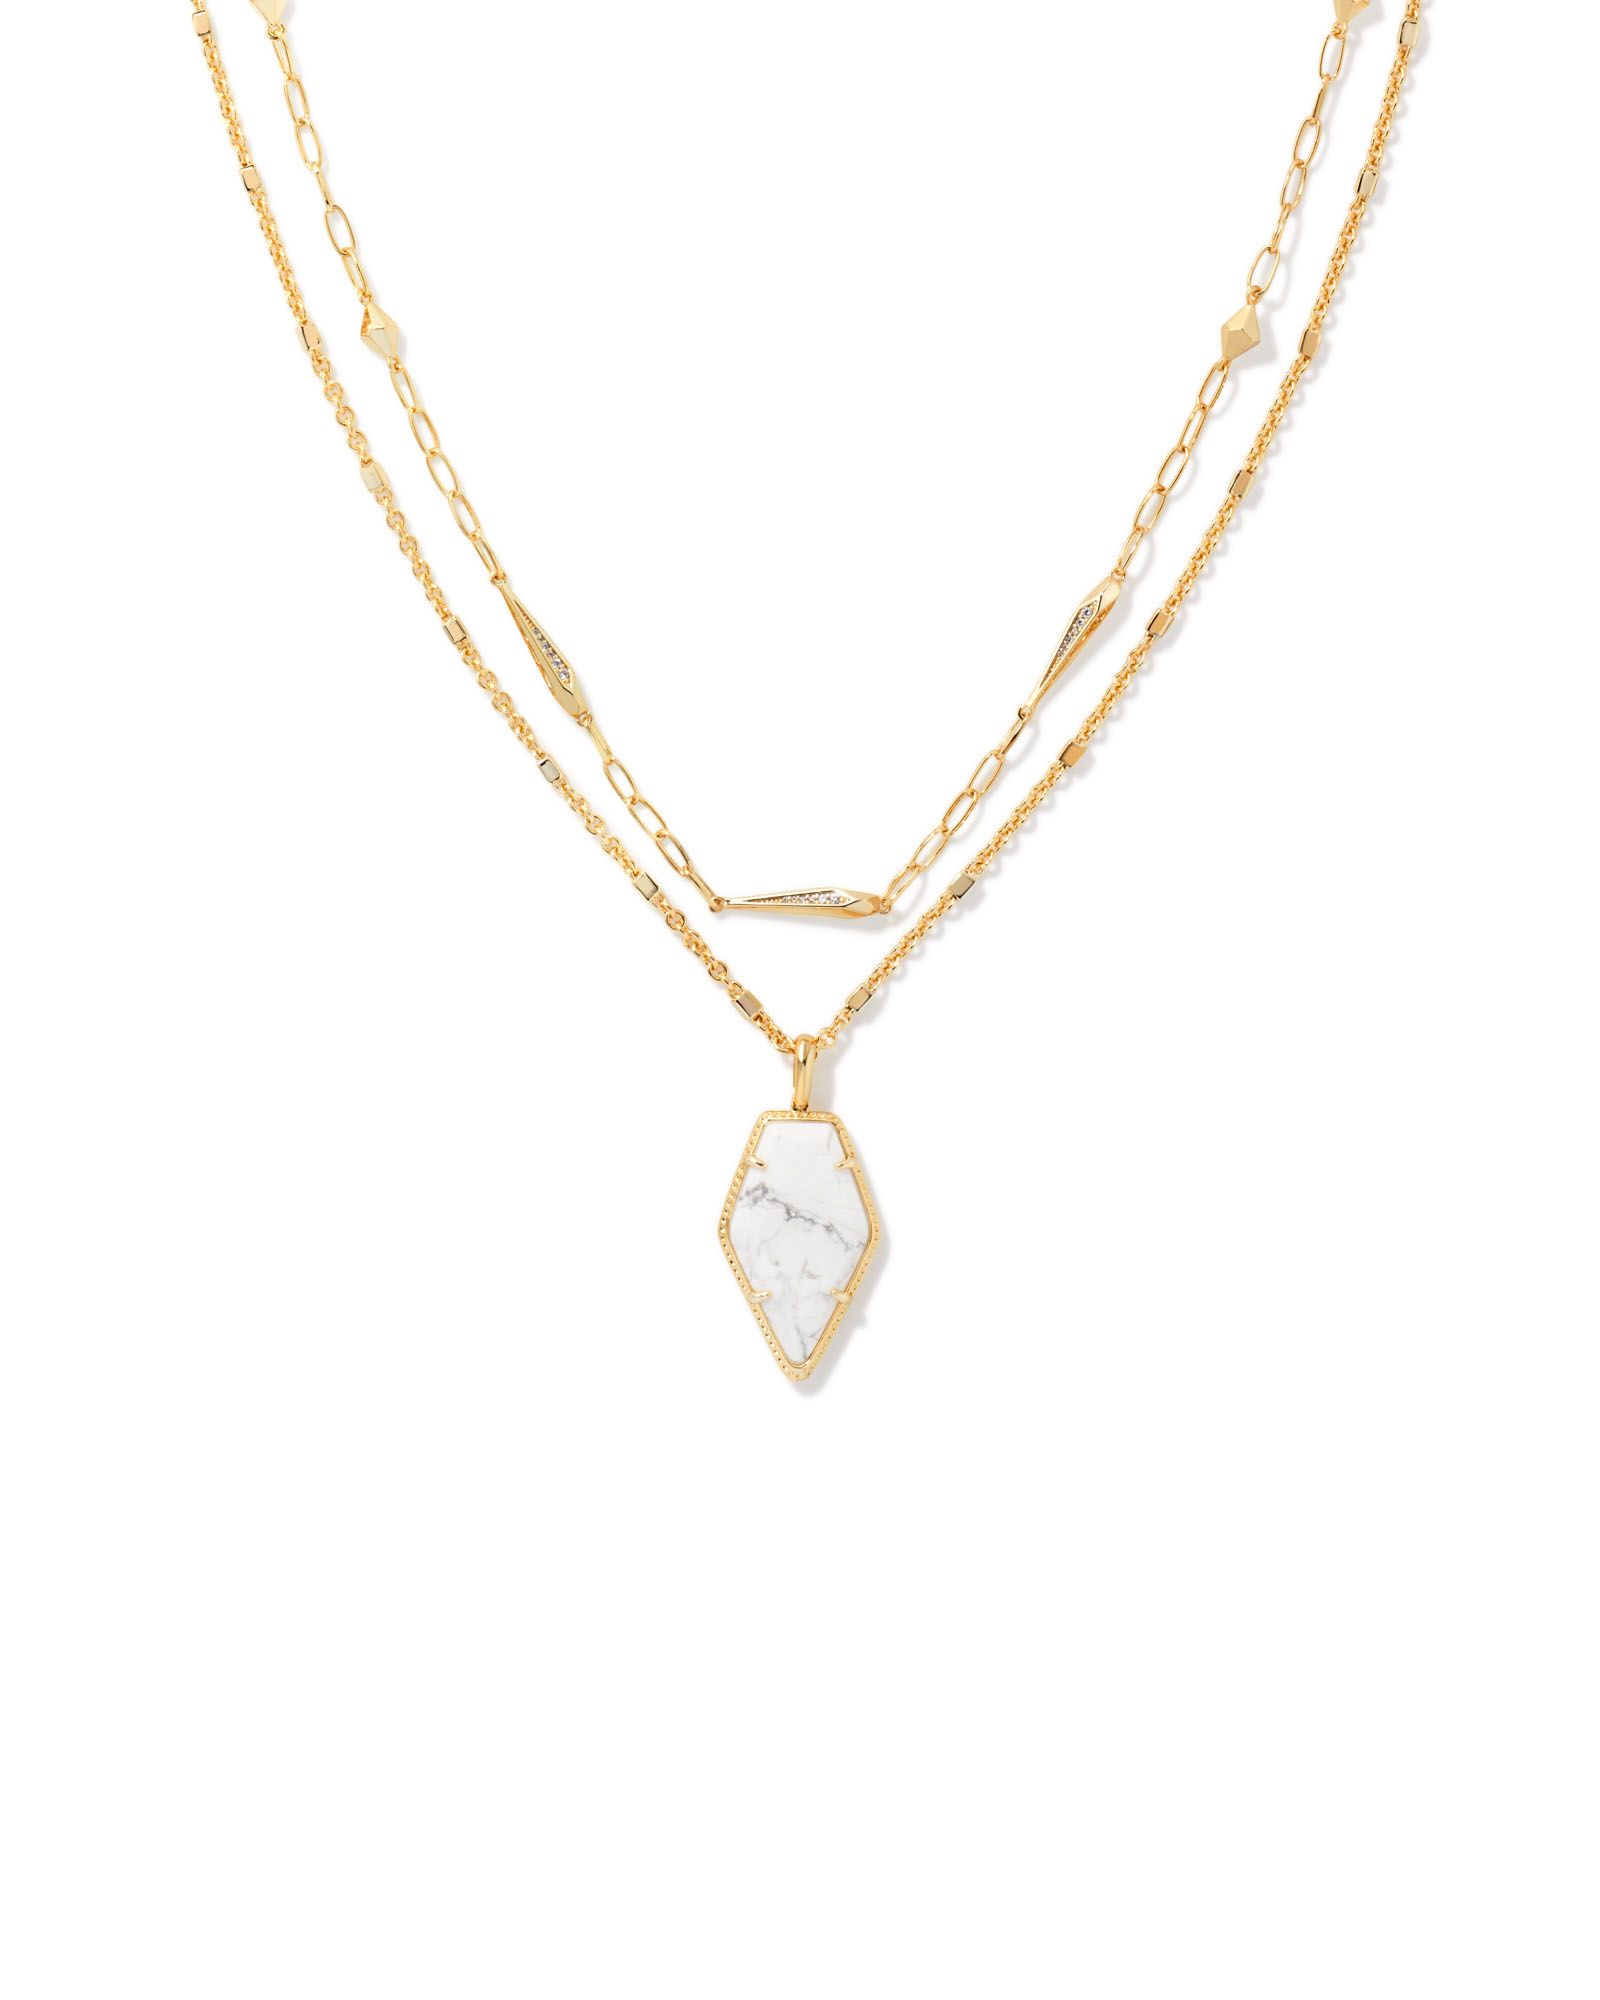 Framed Tessa Convertible Gold Multi Strand Necklace in White Howlite | Kendra Scott